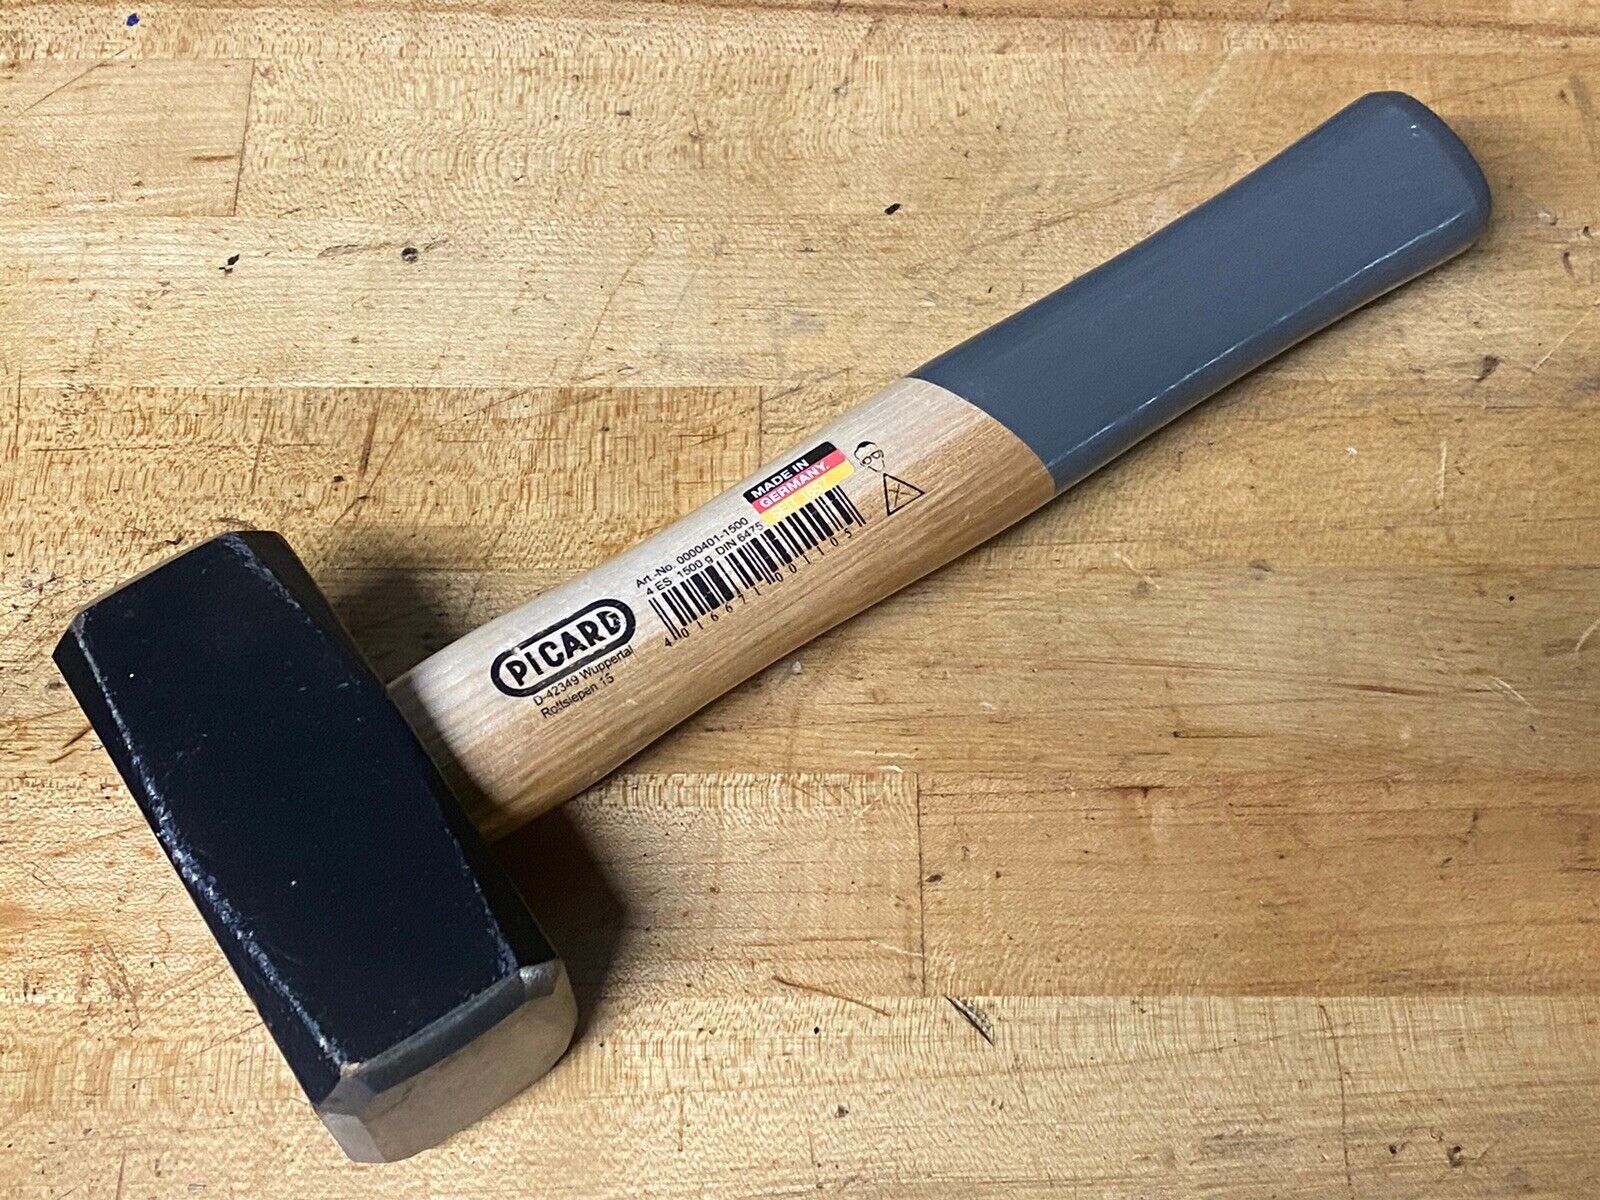 Picard Blacksmith Mini Sledge Hammer 1500g 3.3Lb. Made In Germany